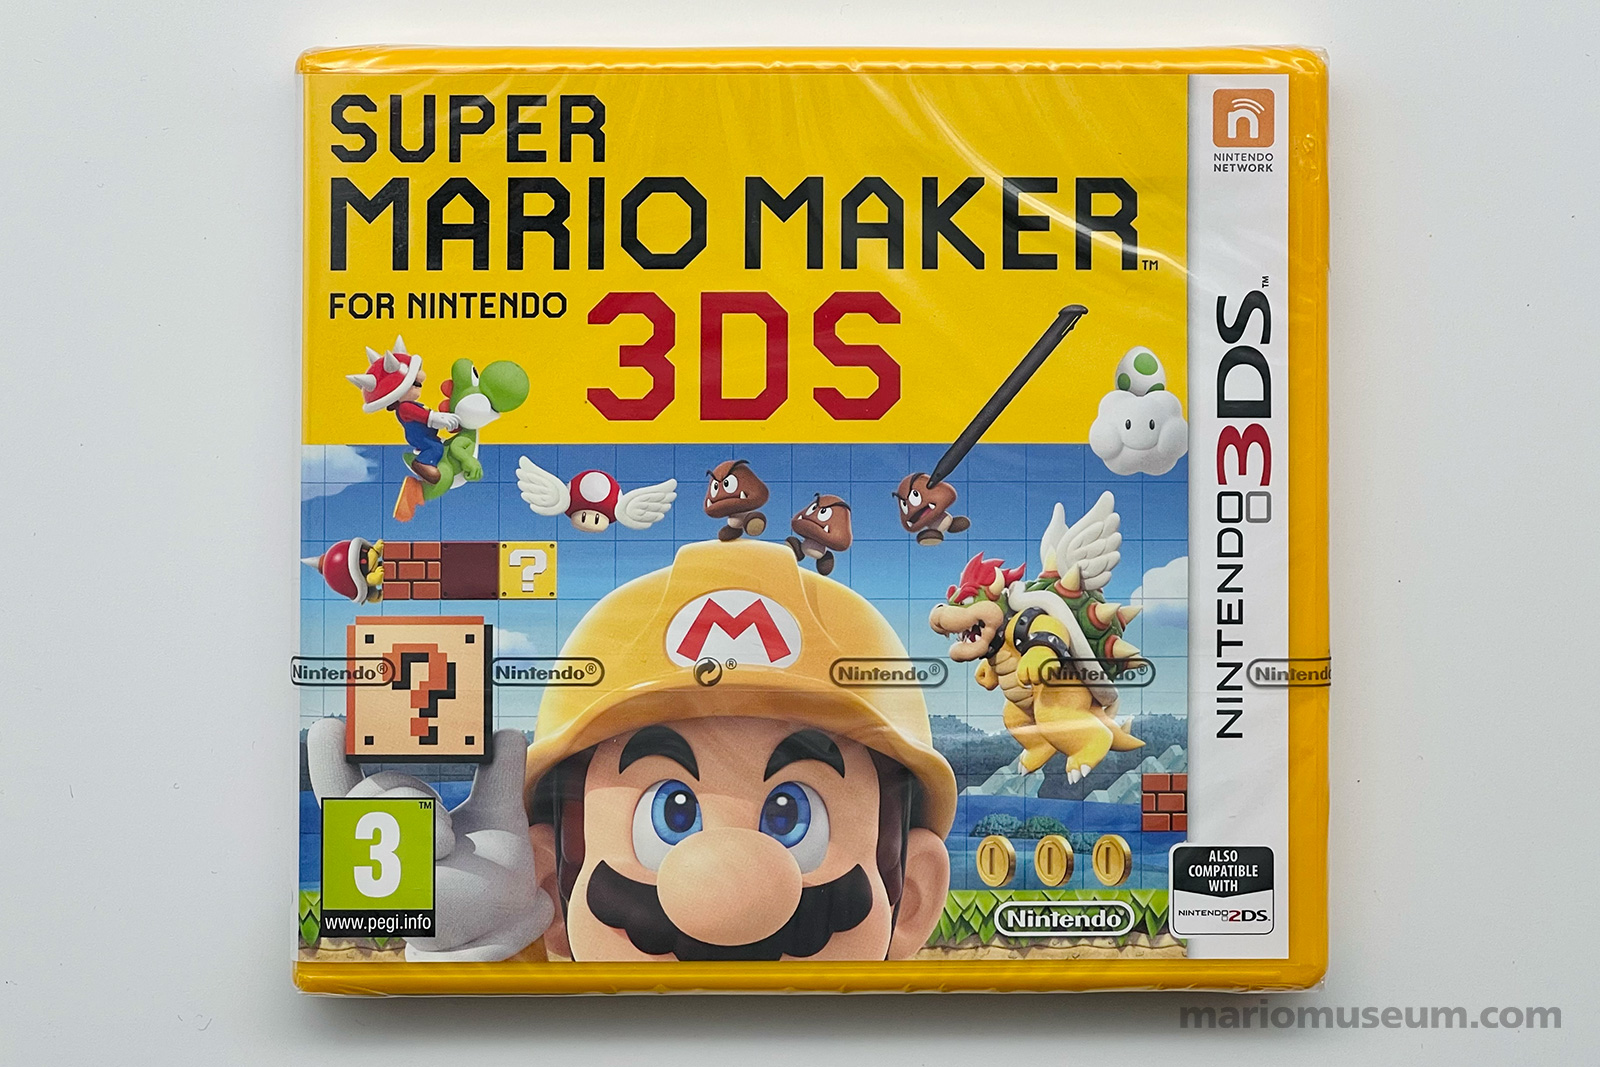 Super Mario Maker for Nintendo 3DS, 3DS